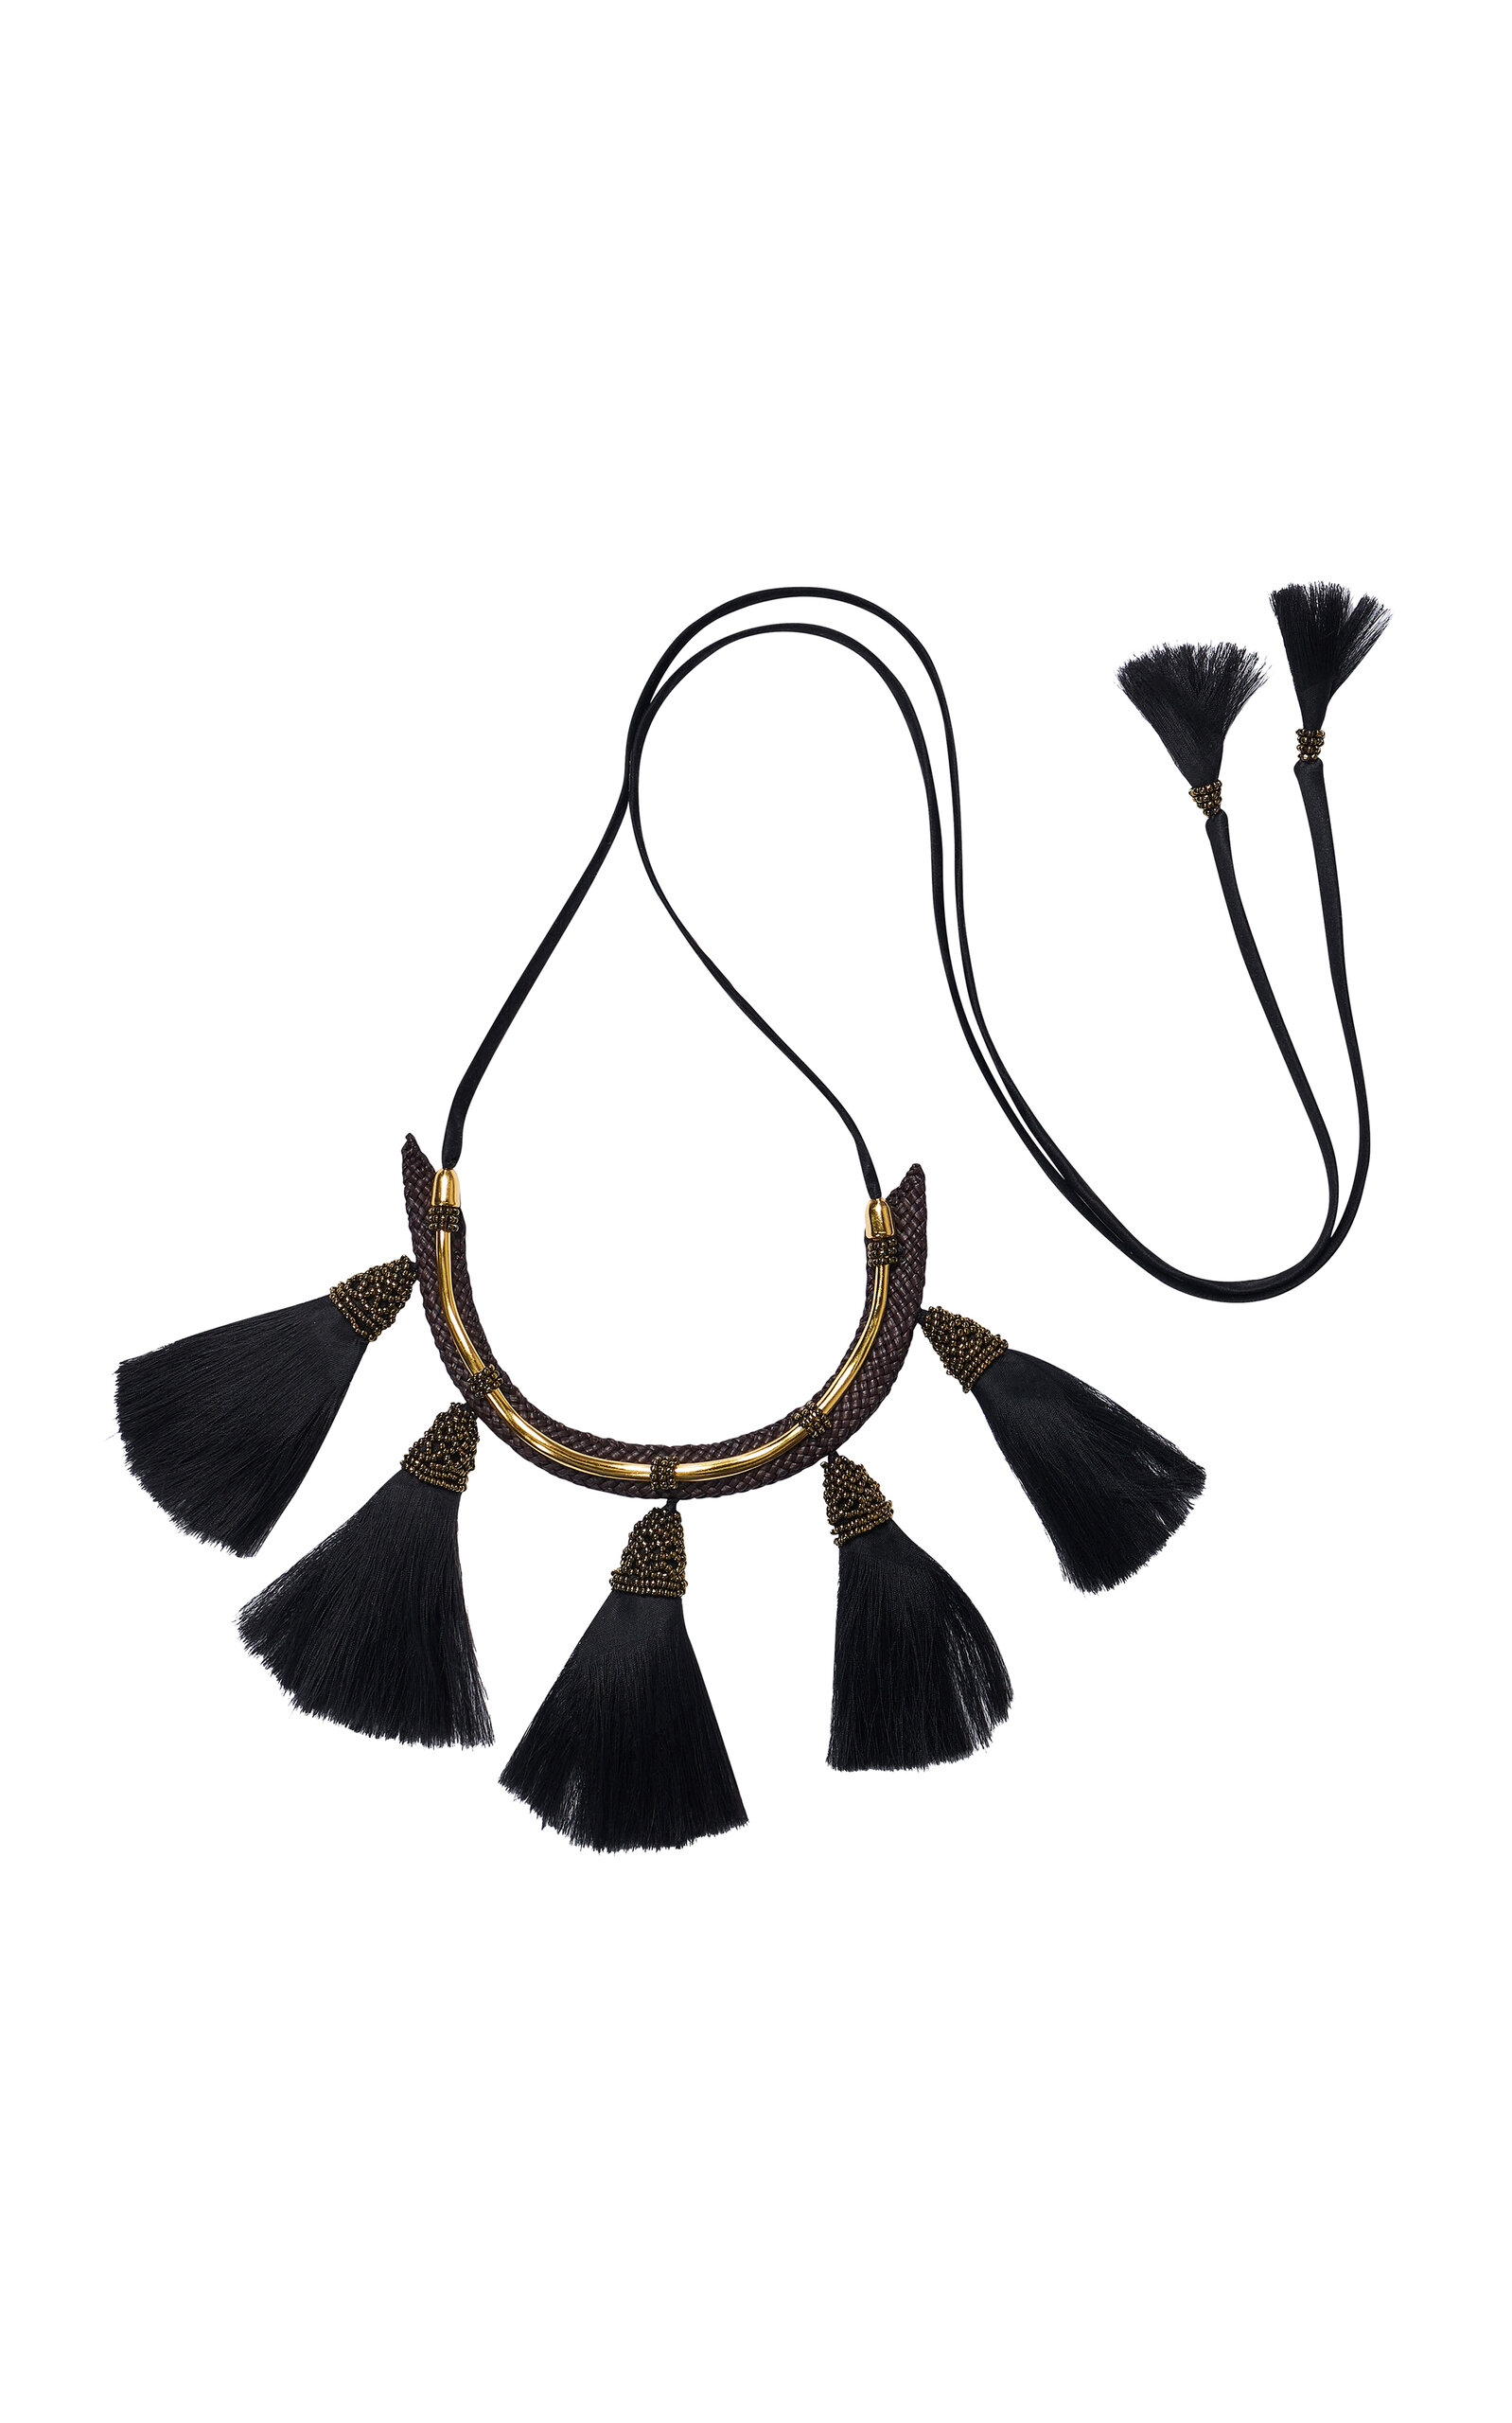 Johanna Ortiz - Seminole Wisdom Gold-Plated Silk and Palm Necklace - Black - OS - Moda Operandi - Gifts For Her